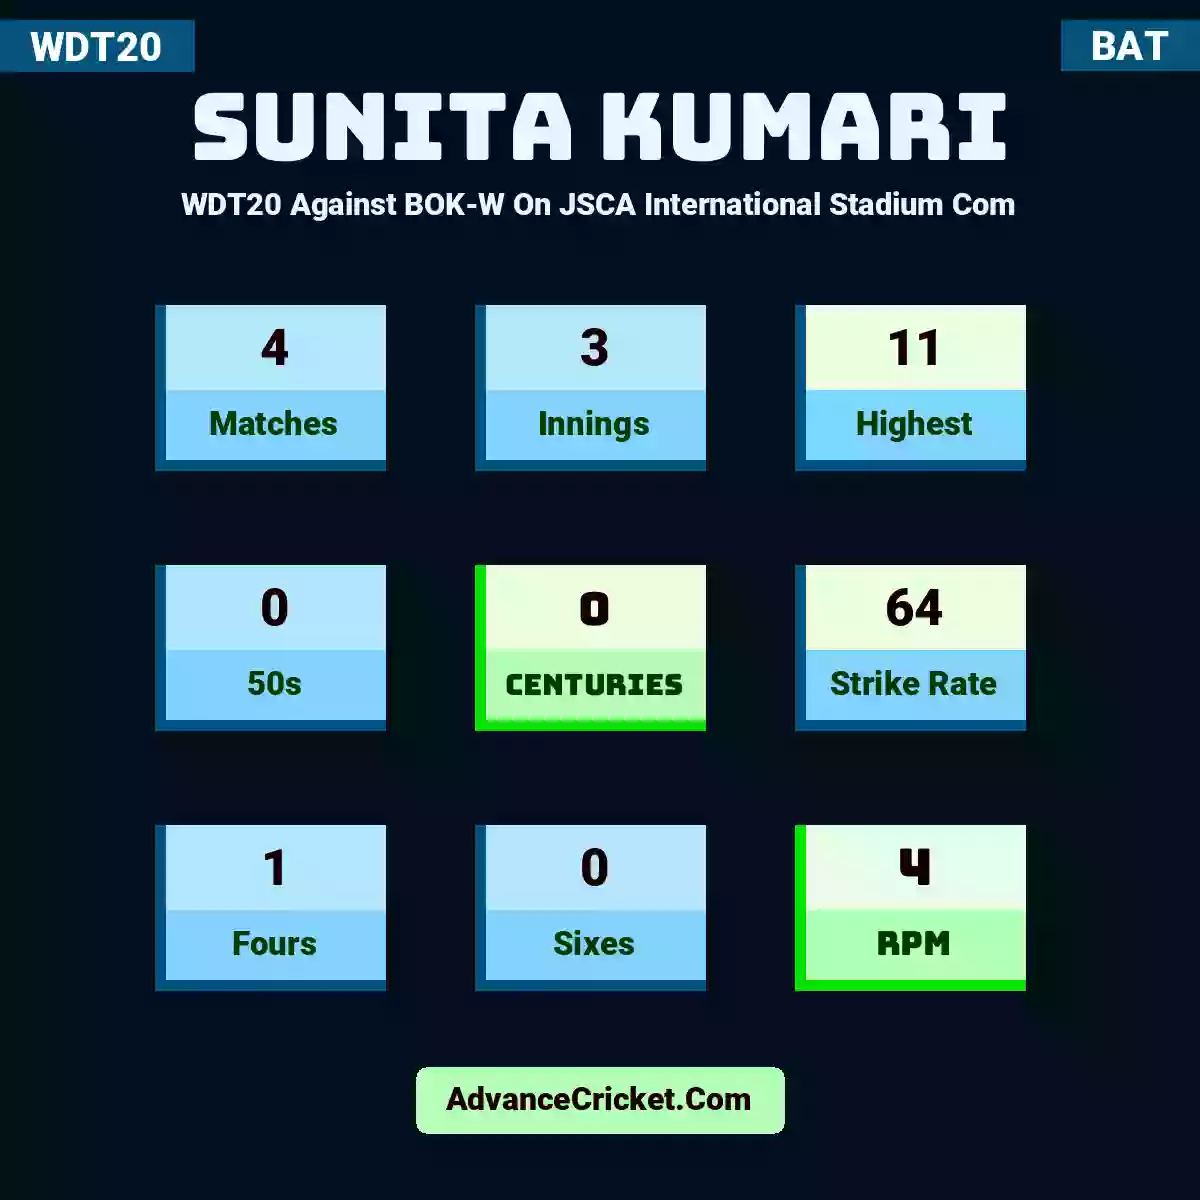 Sunita Kumari WDT20  Against BOK-W On JSCA International Stadium Com, Sunita Kumari played 4 matches, scored 11 runs as highest, 0 half-centuries, and 0 centuries, with a strike rate of 64. S.Kumari hit 1 fours and 0 sixes, with an RPM of 4.